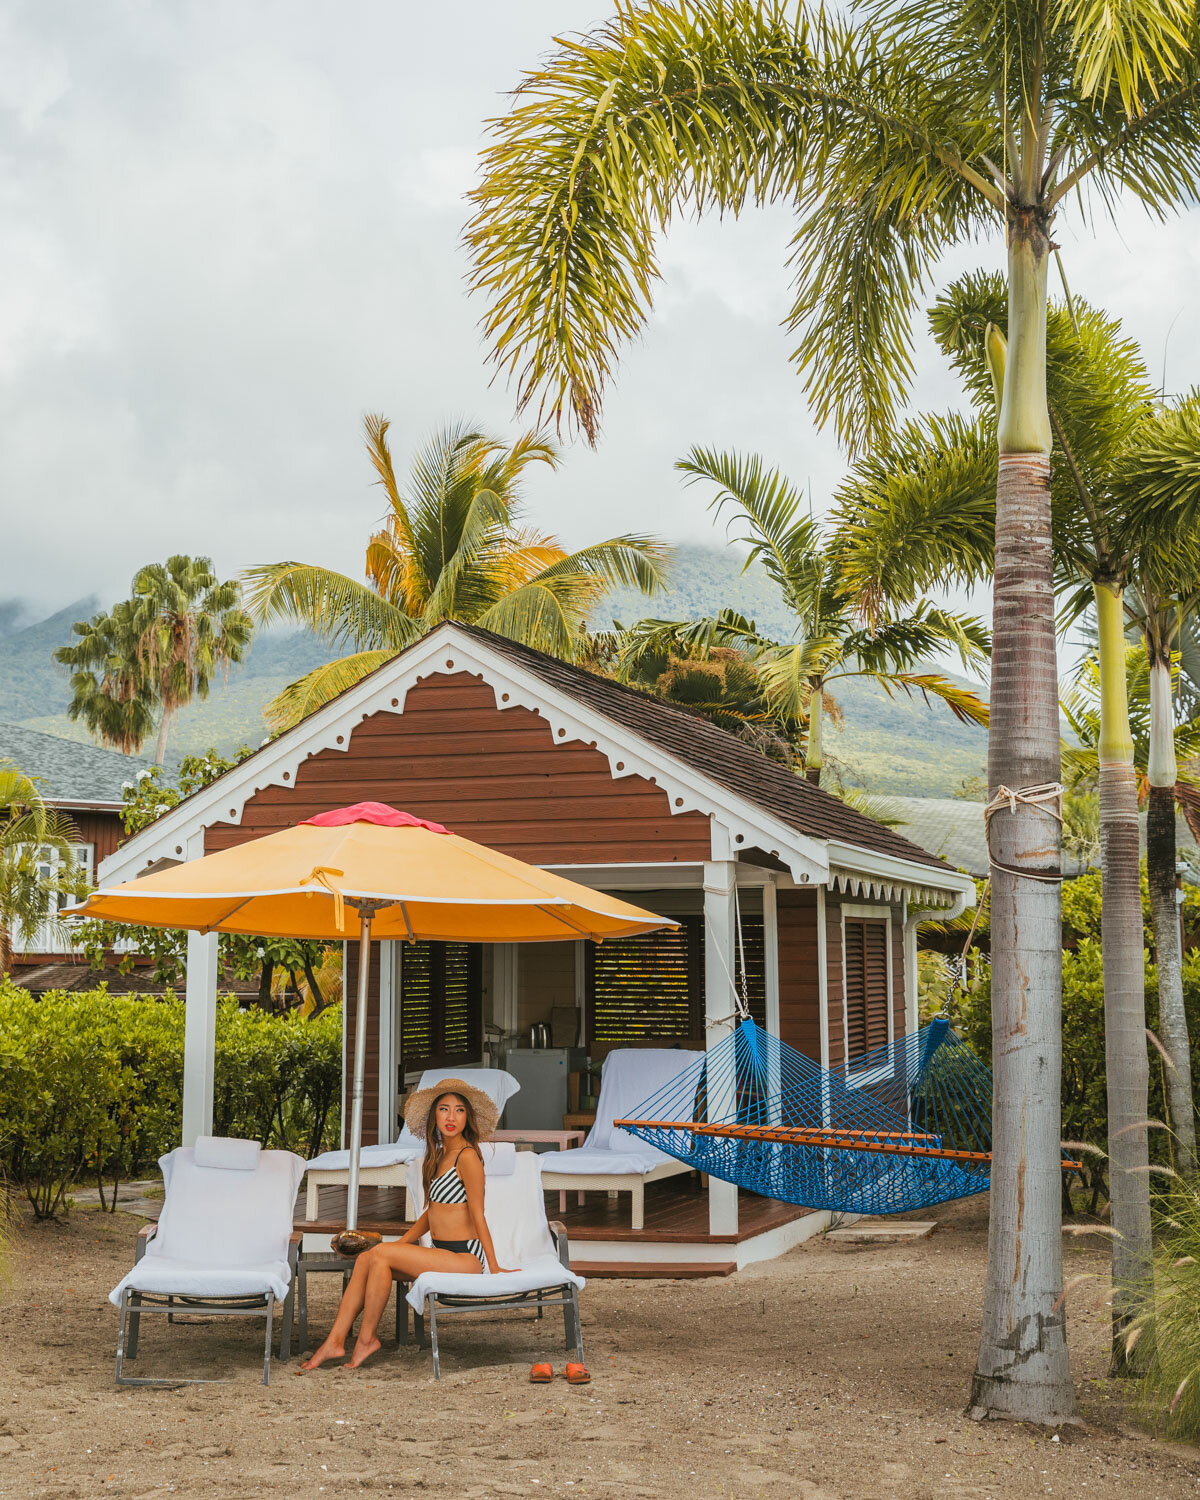 Beach cabana huts at Four Seasons Resort Nevis | Caribbean Travel | Luxury Hotels | West Indies | #beaches #paradise #island